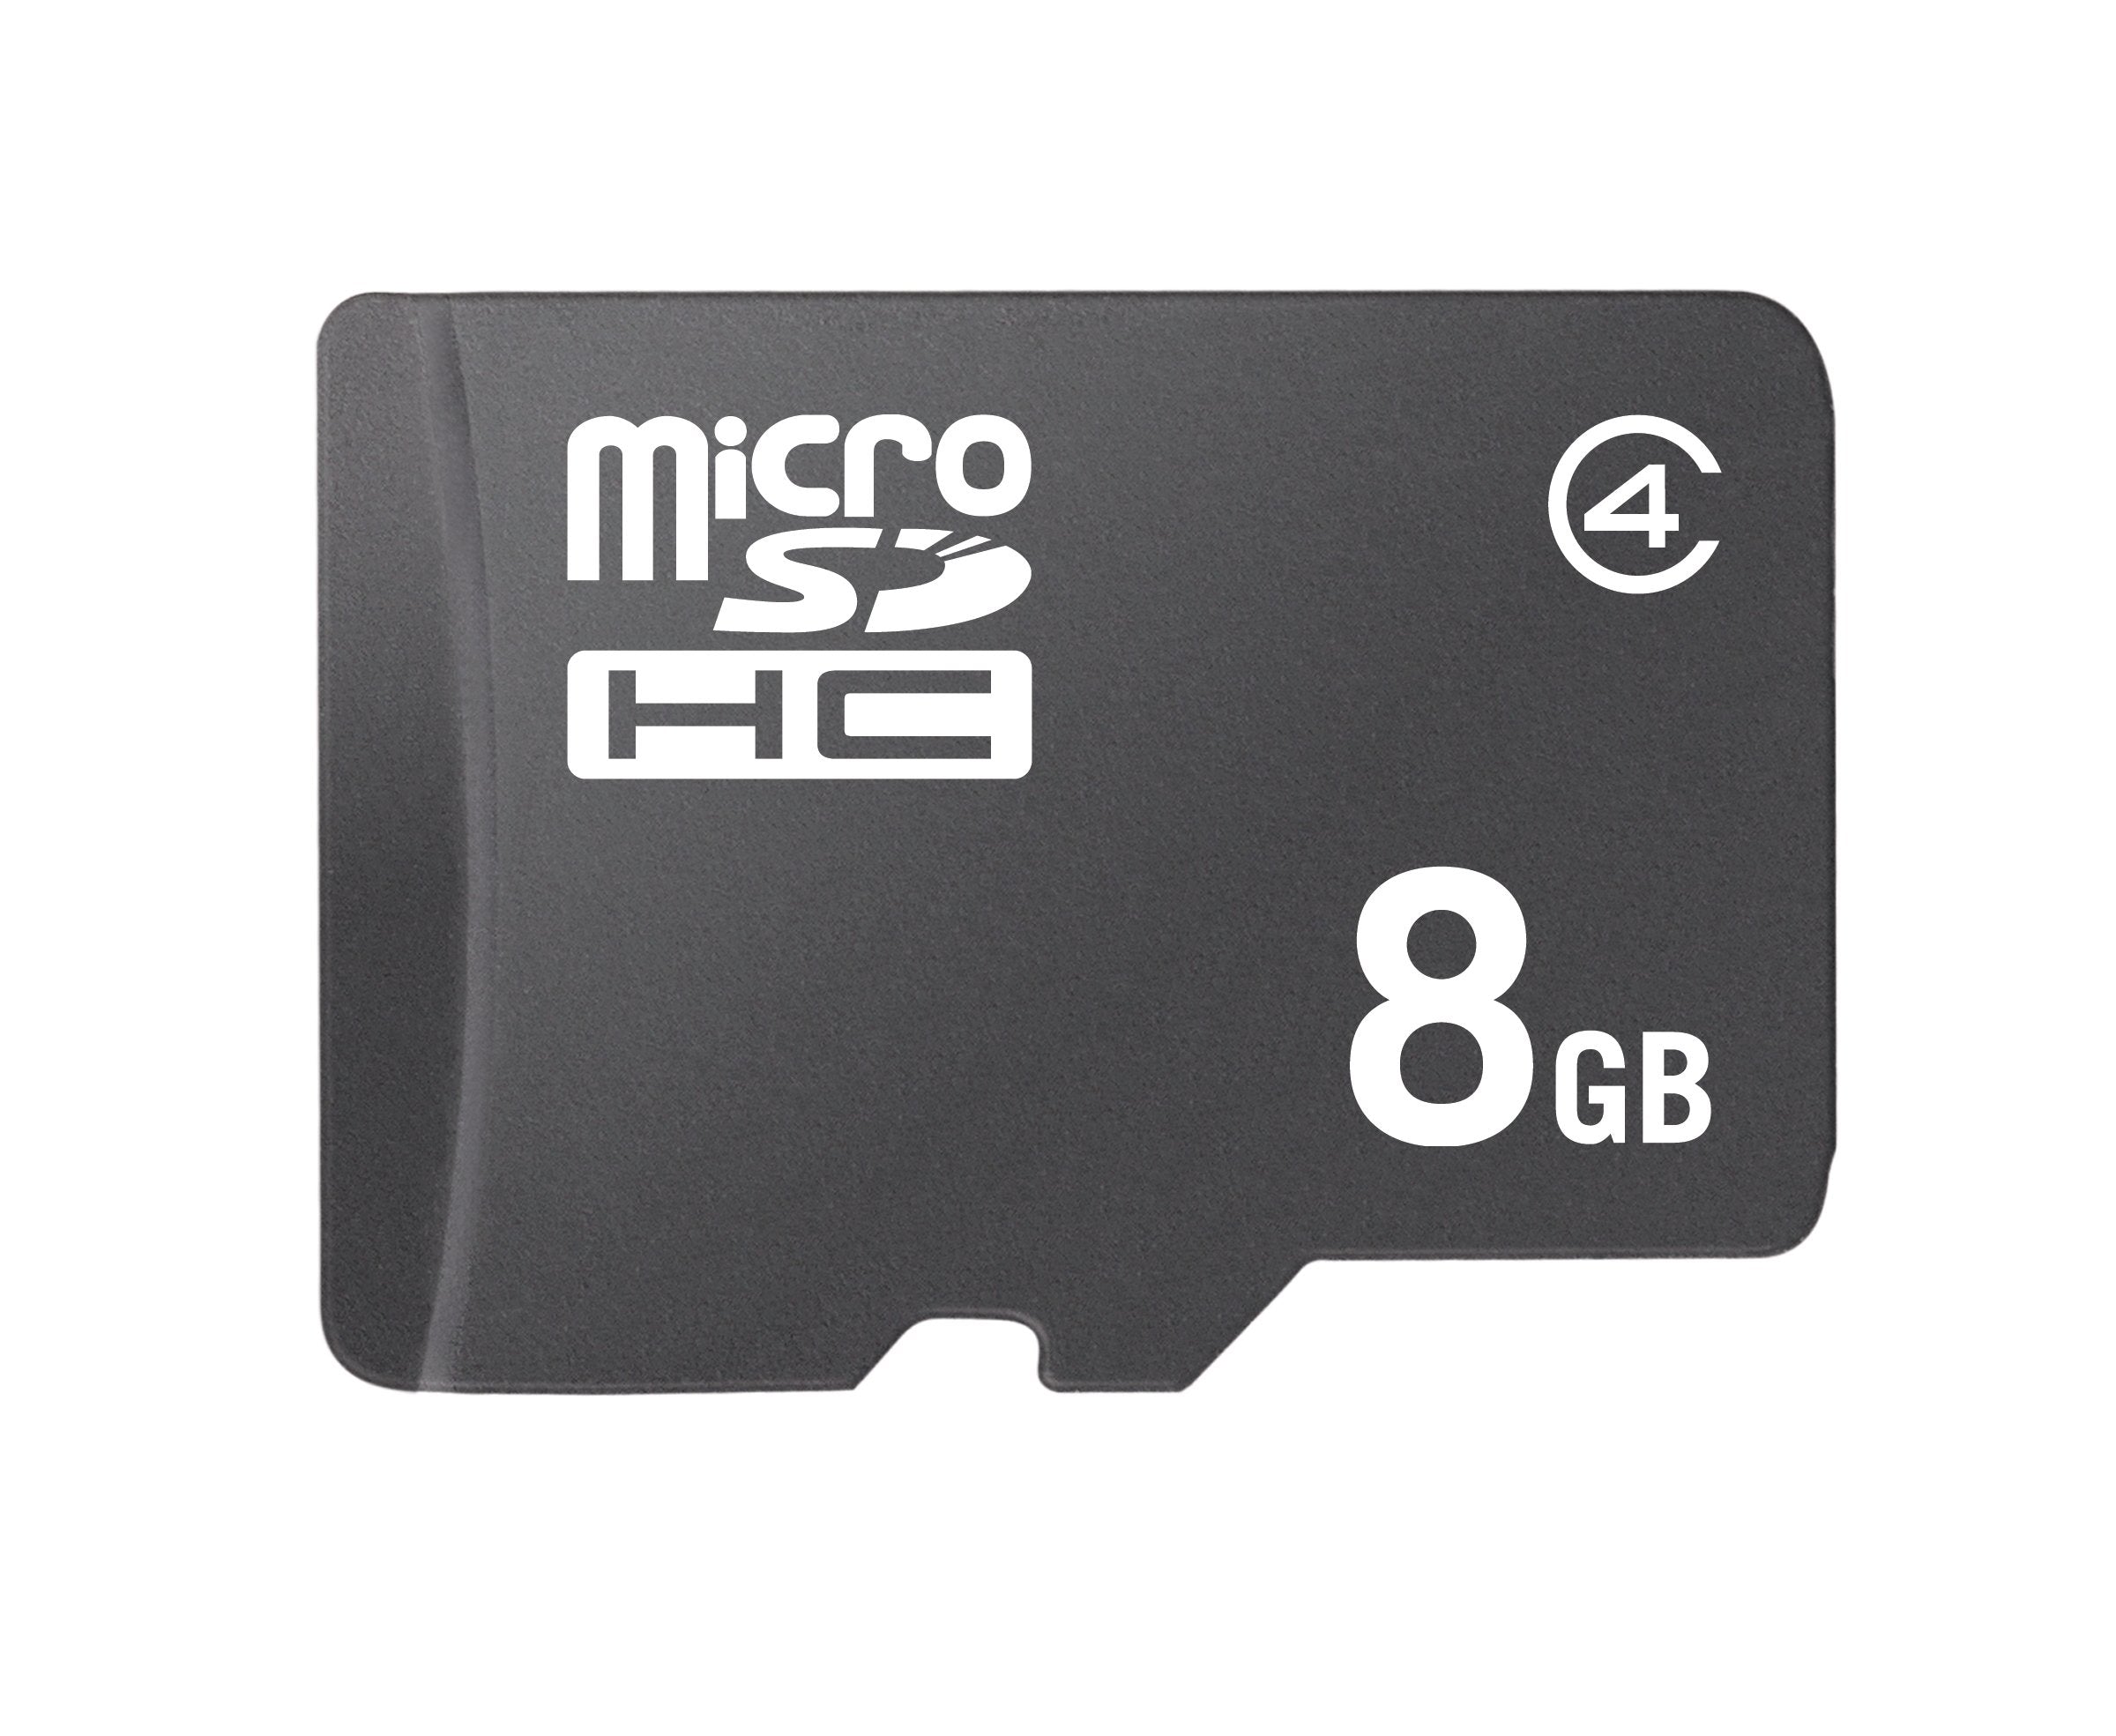 EasyStore 8GB microSDHC Card (SDSDQES-008G-G11M)